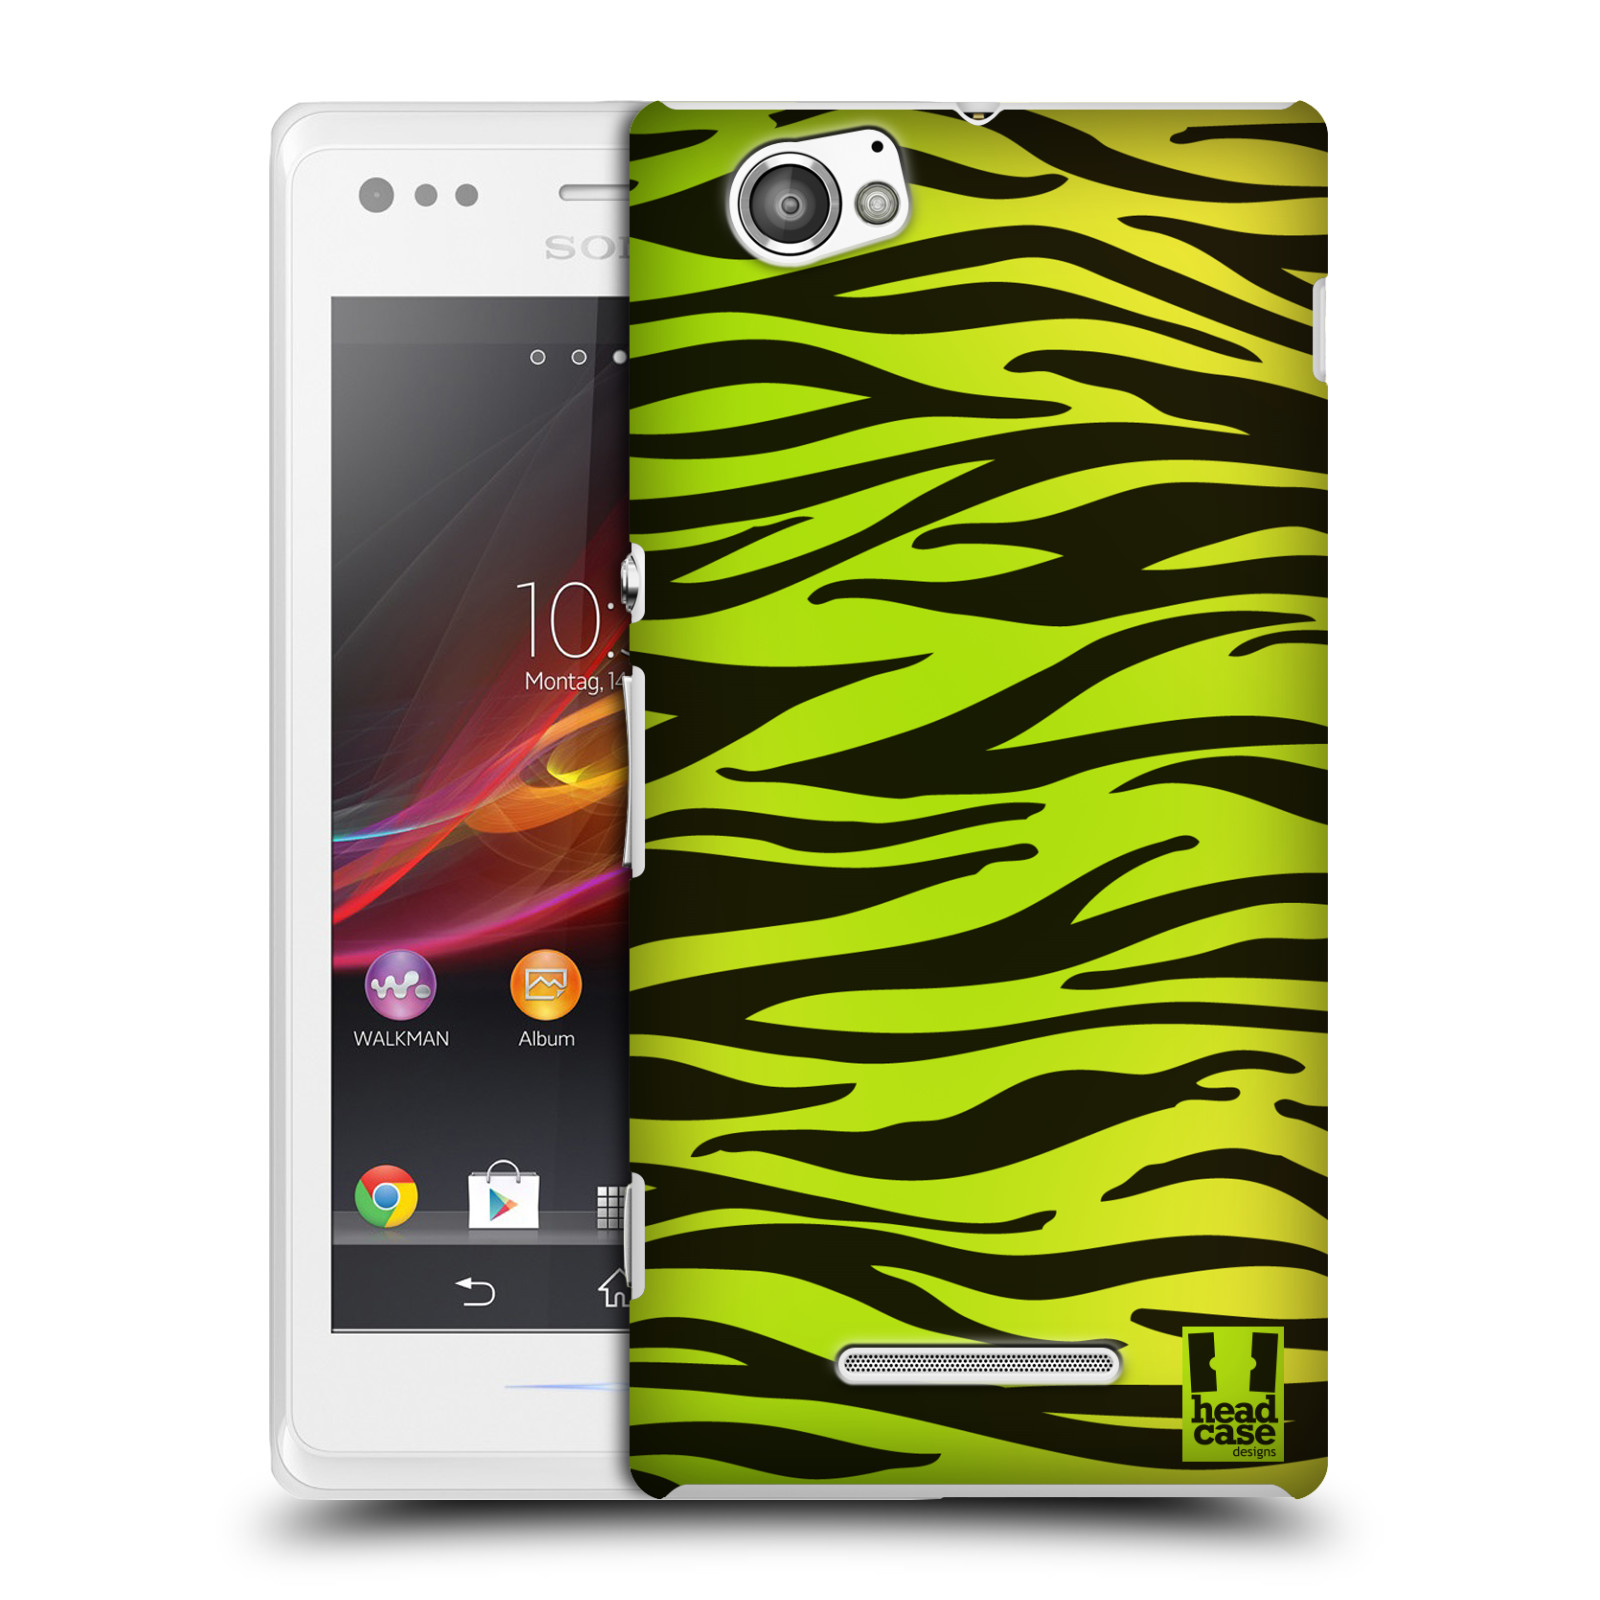 HEAD CASE plastový obal na mobil Sony Xperia M vzor Divočina zvíře zelená zebra